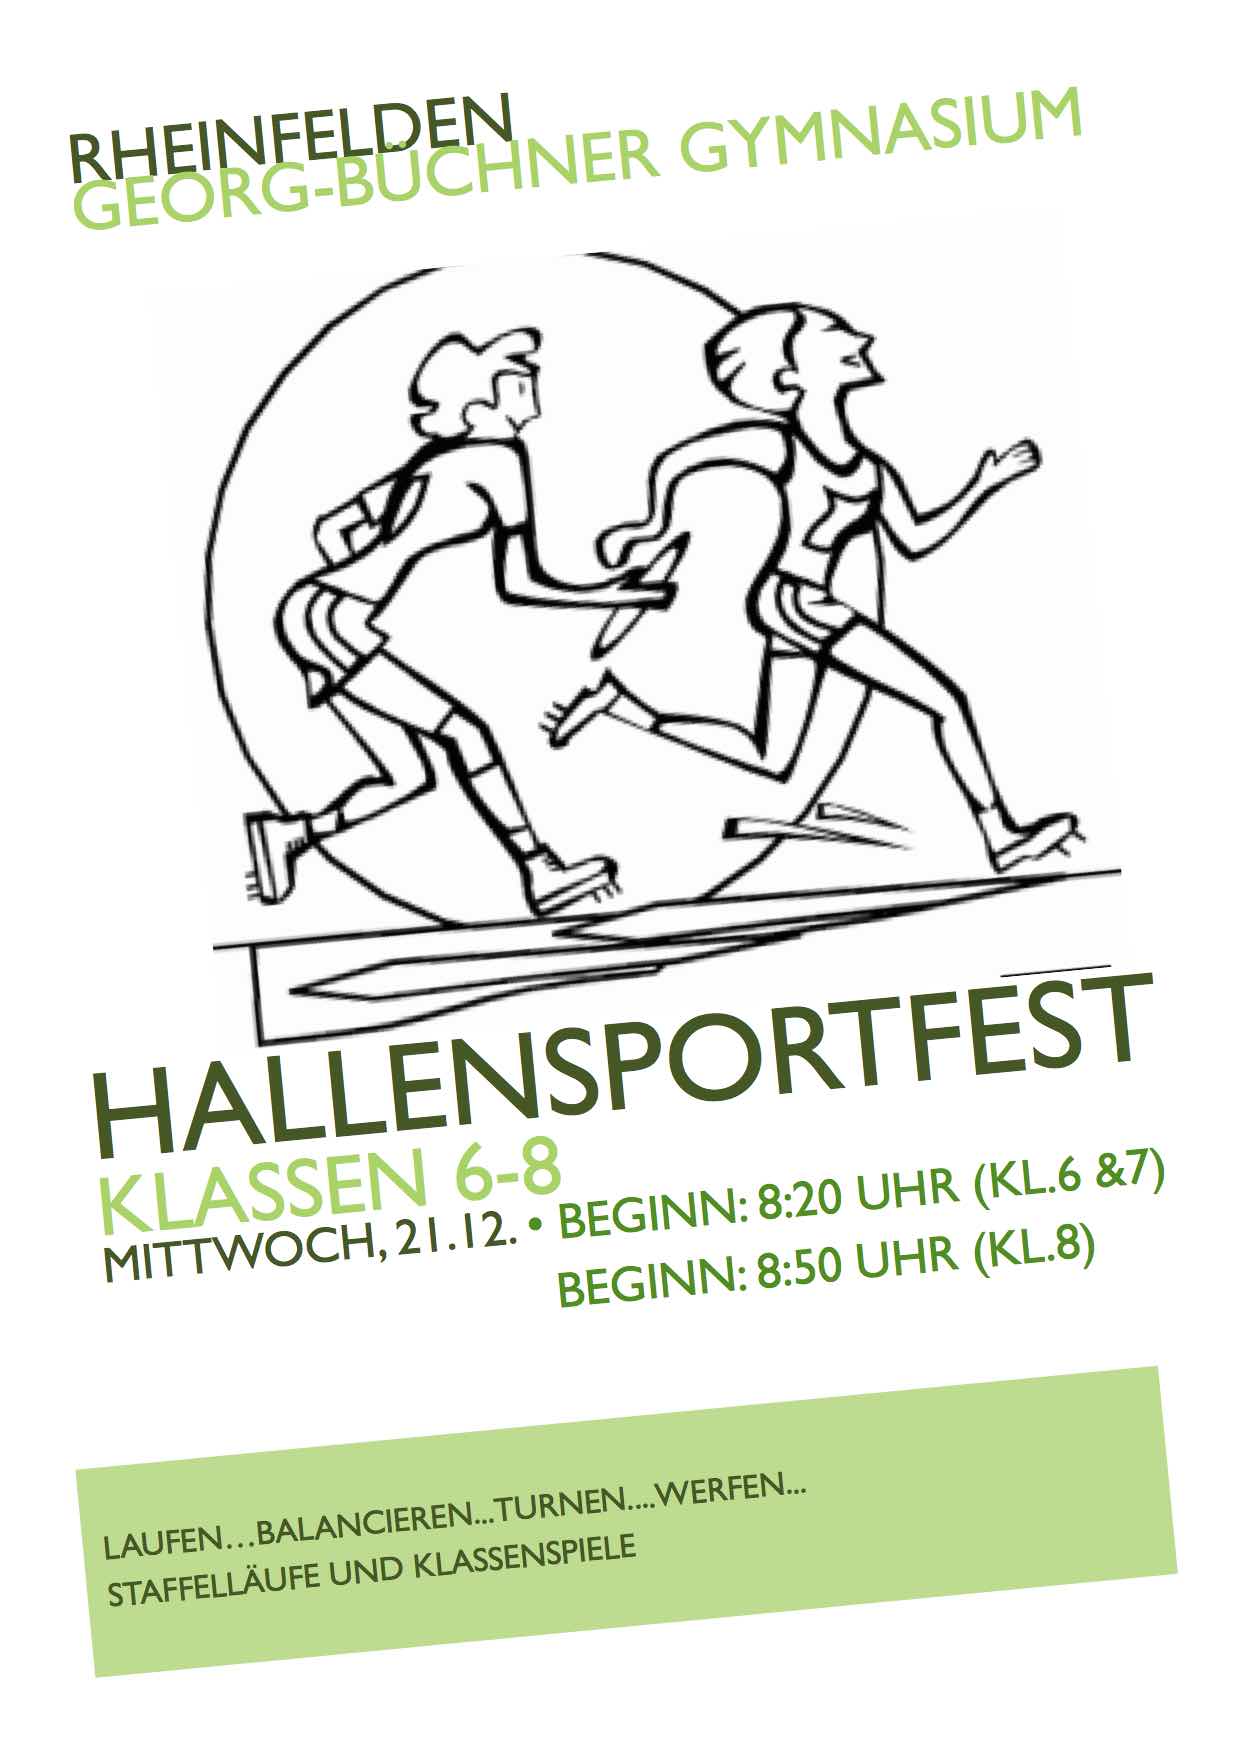 Hallensportfest